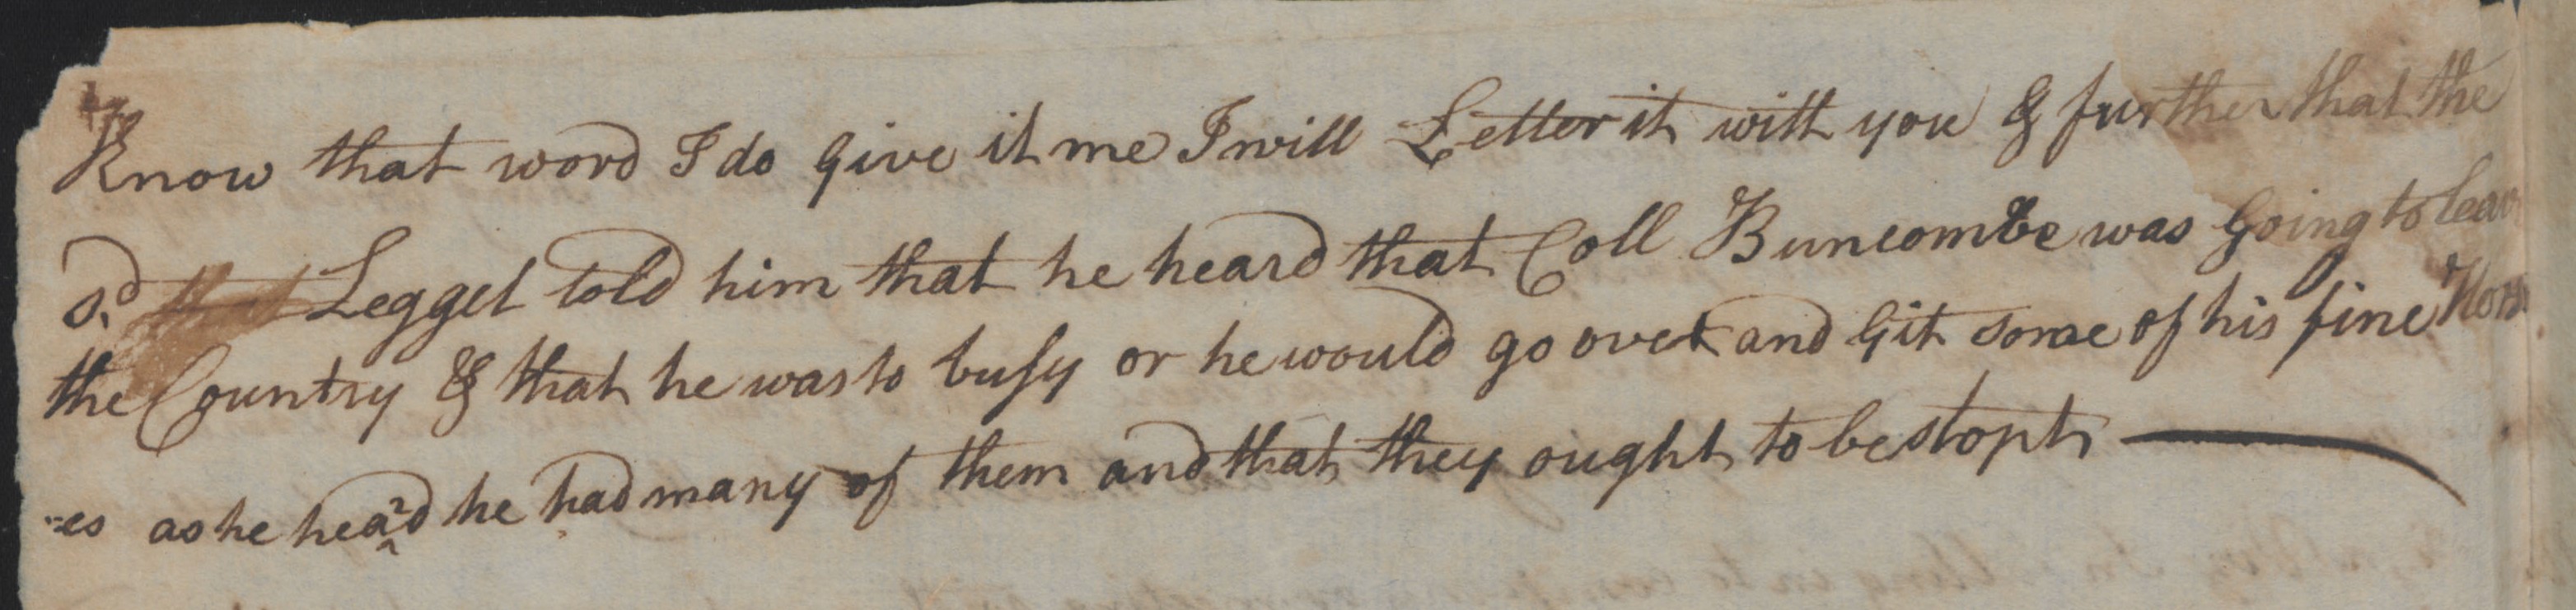 Deposition of William Burket, c1 July 1777, page 2